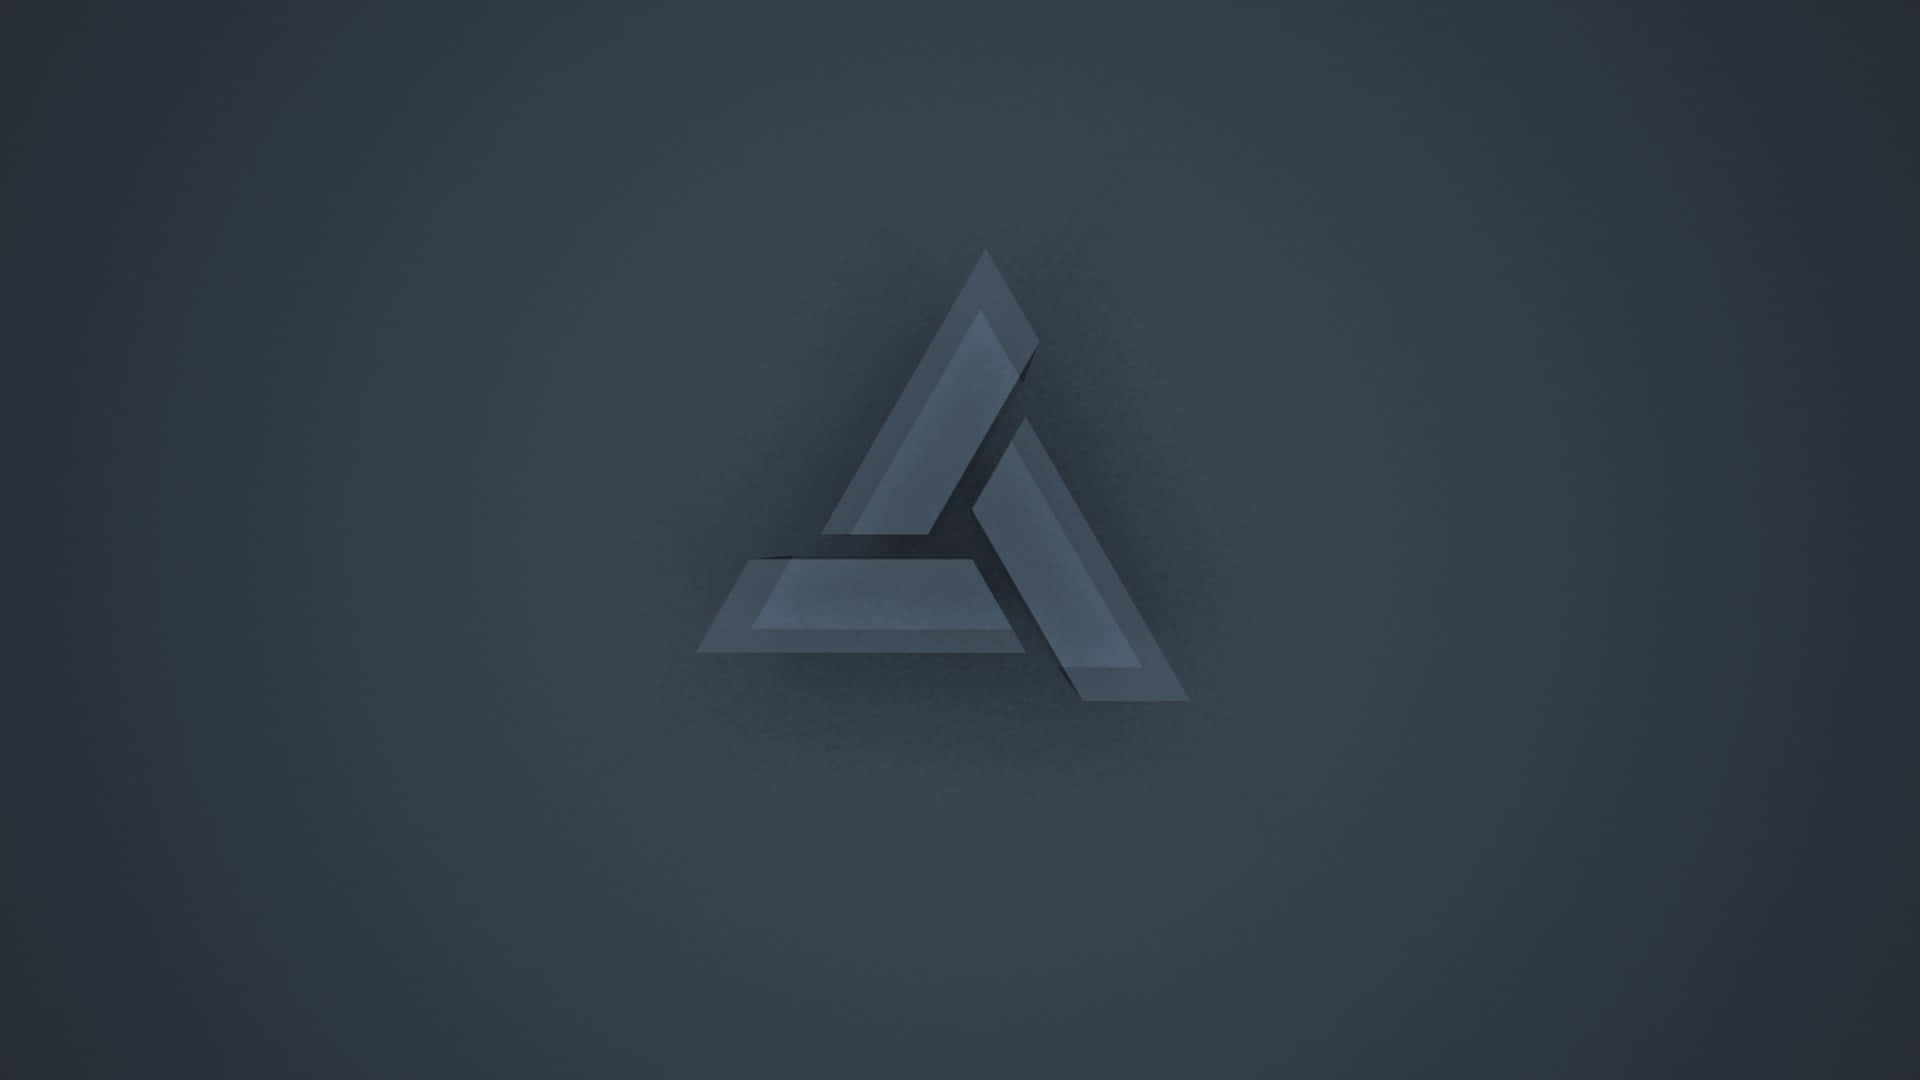 Abstergo Industries Logo on Futuristic Background Wallpaper